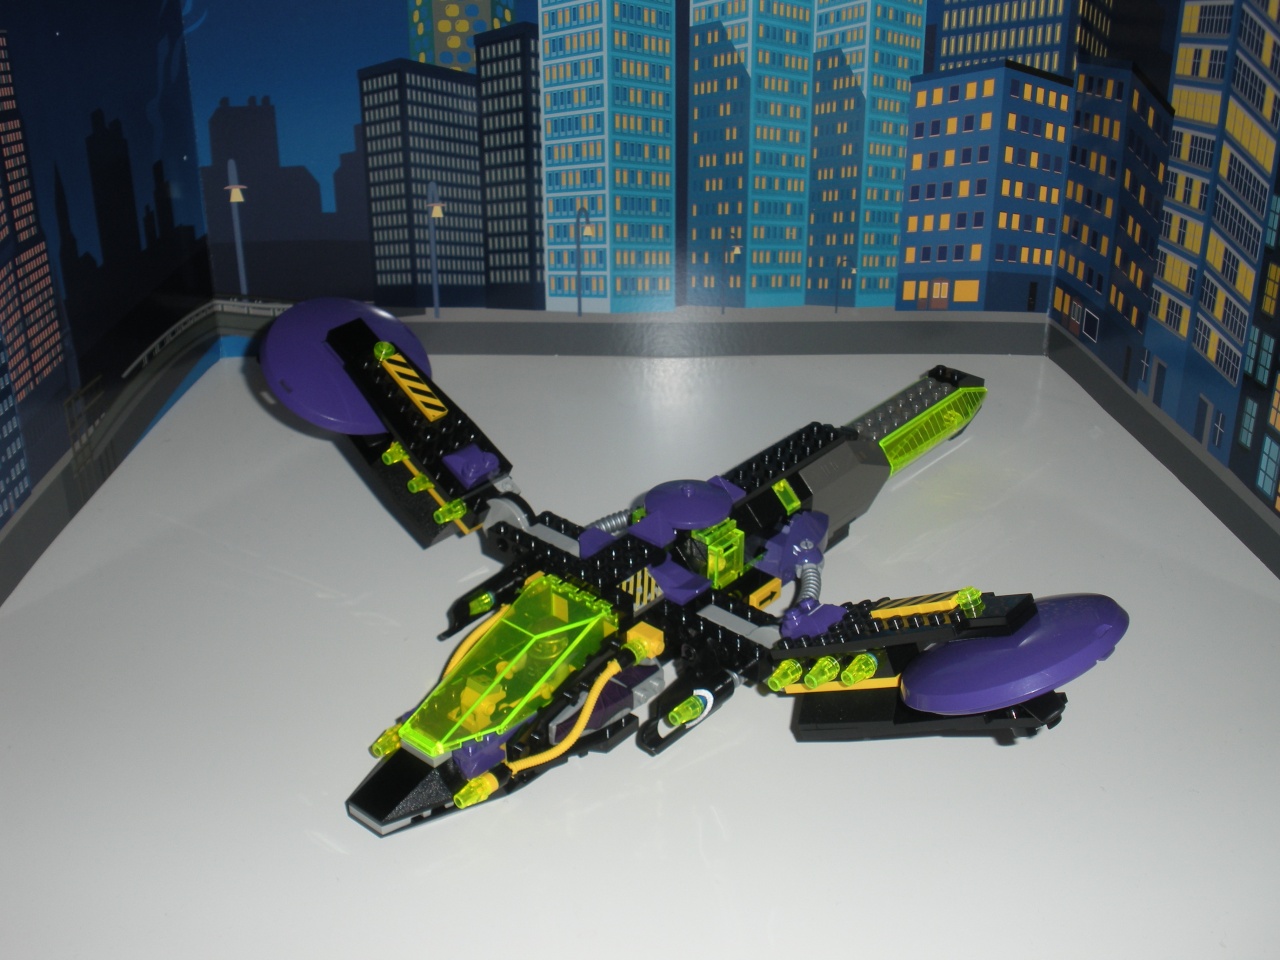 The Cyberfly Fighter Version I Cyberf14